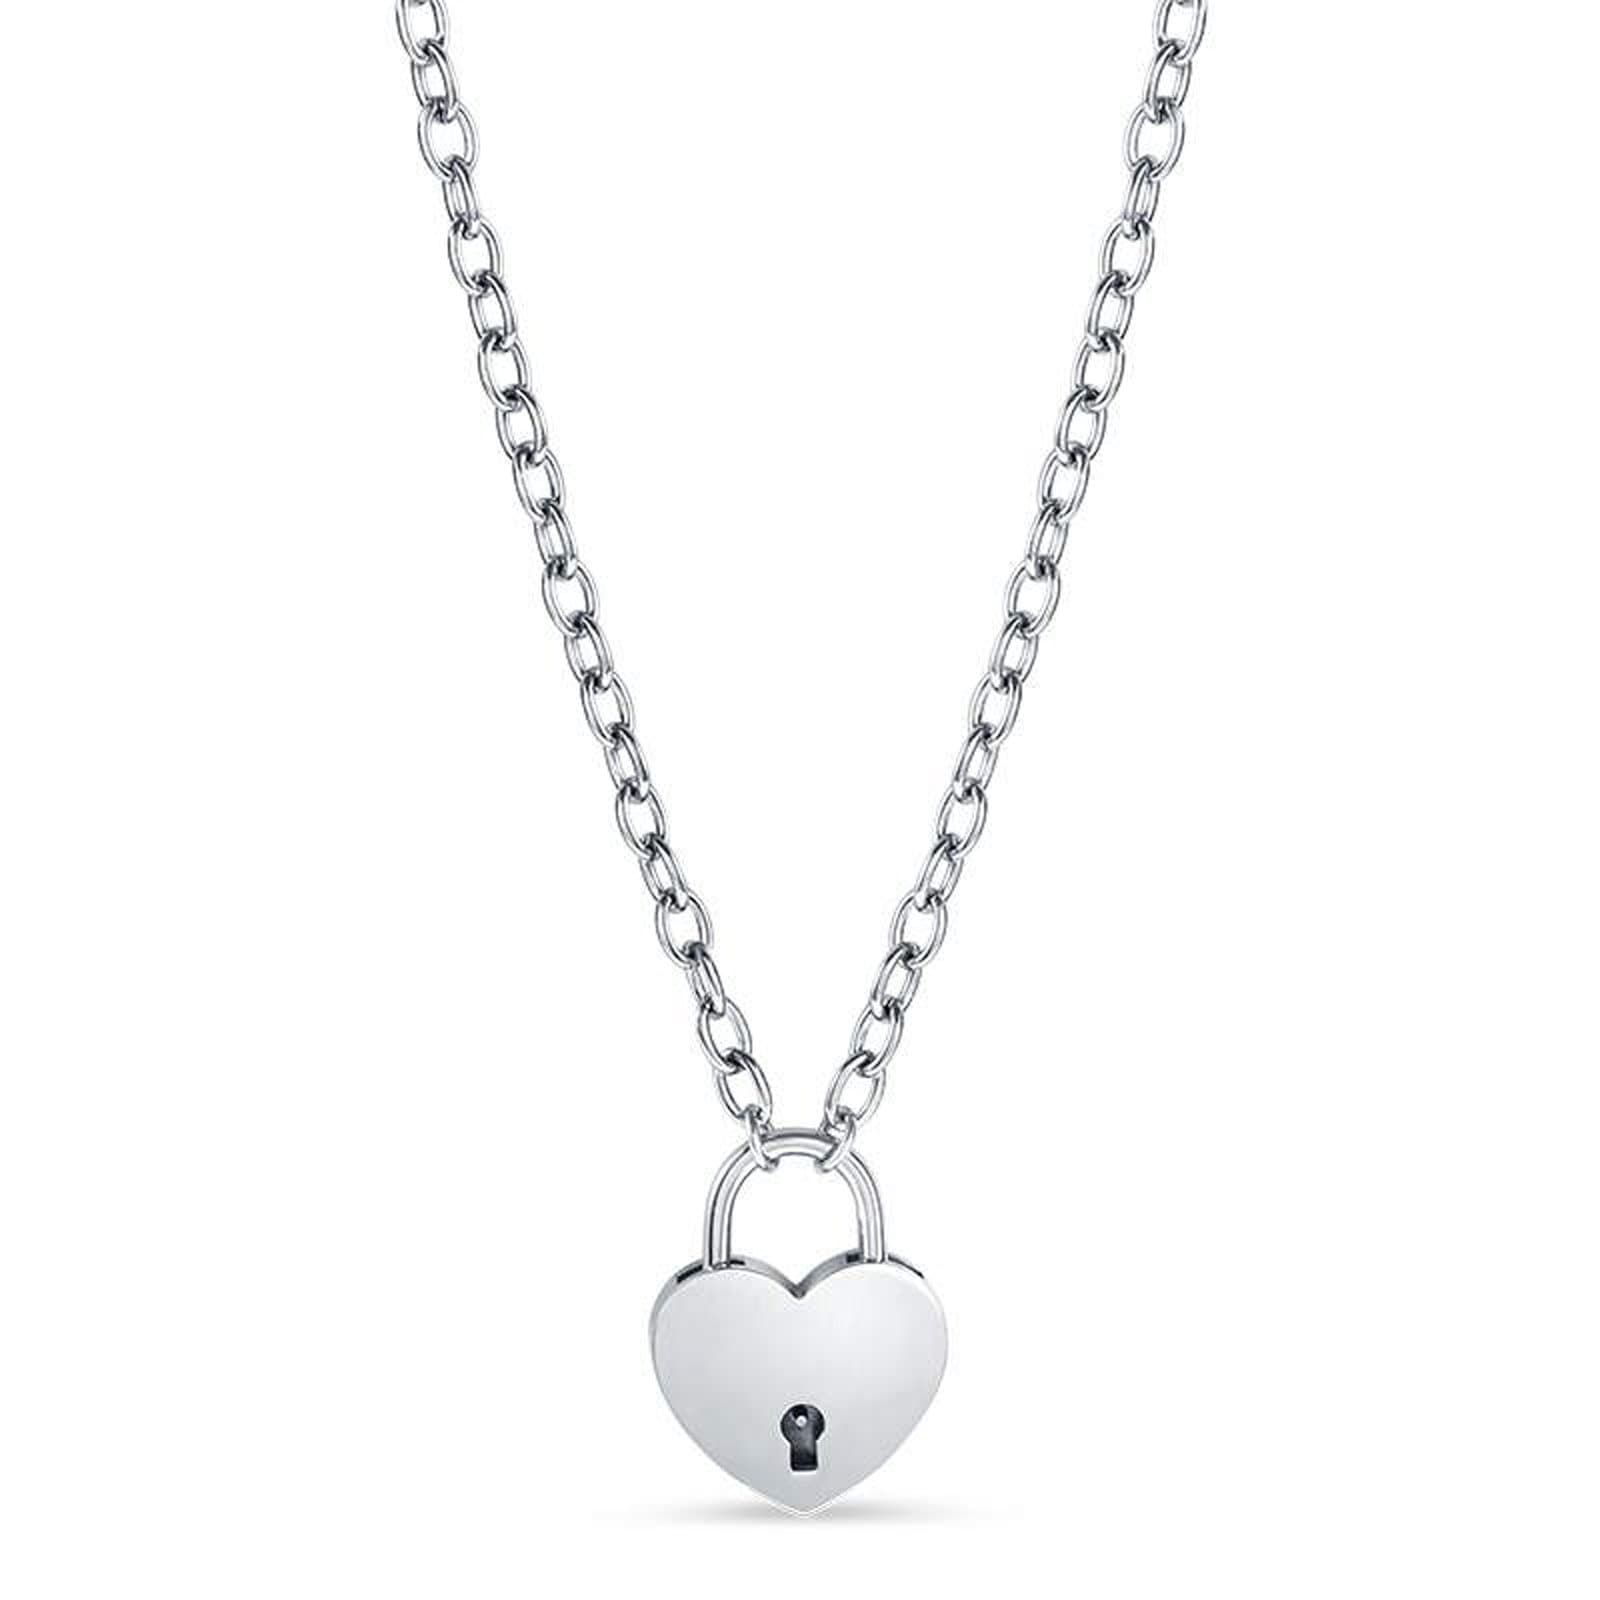 Heart Lock Necklace Silver - Eva Bryn Shoetique